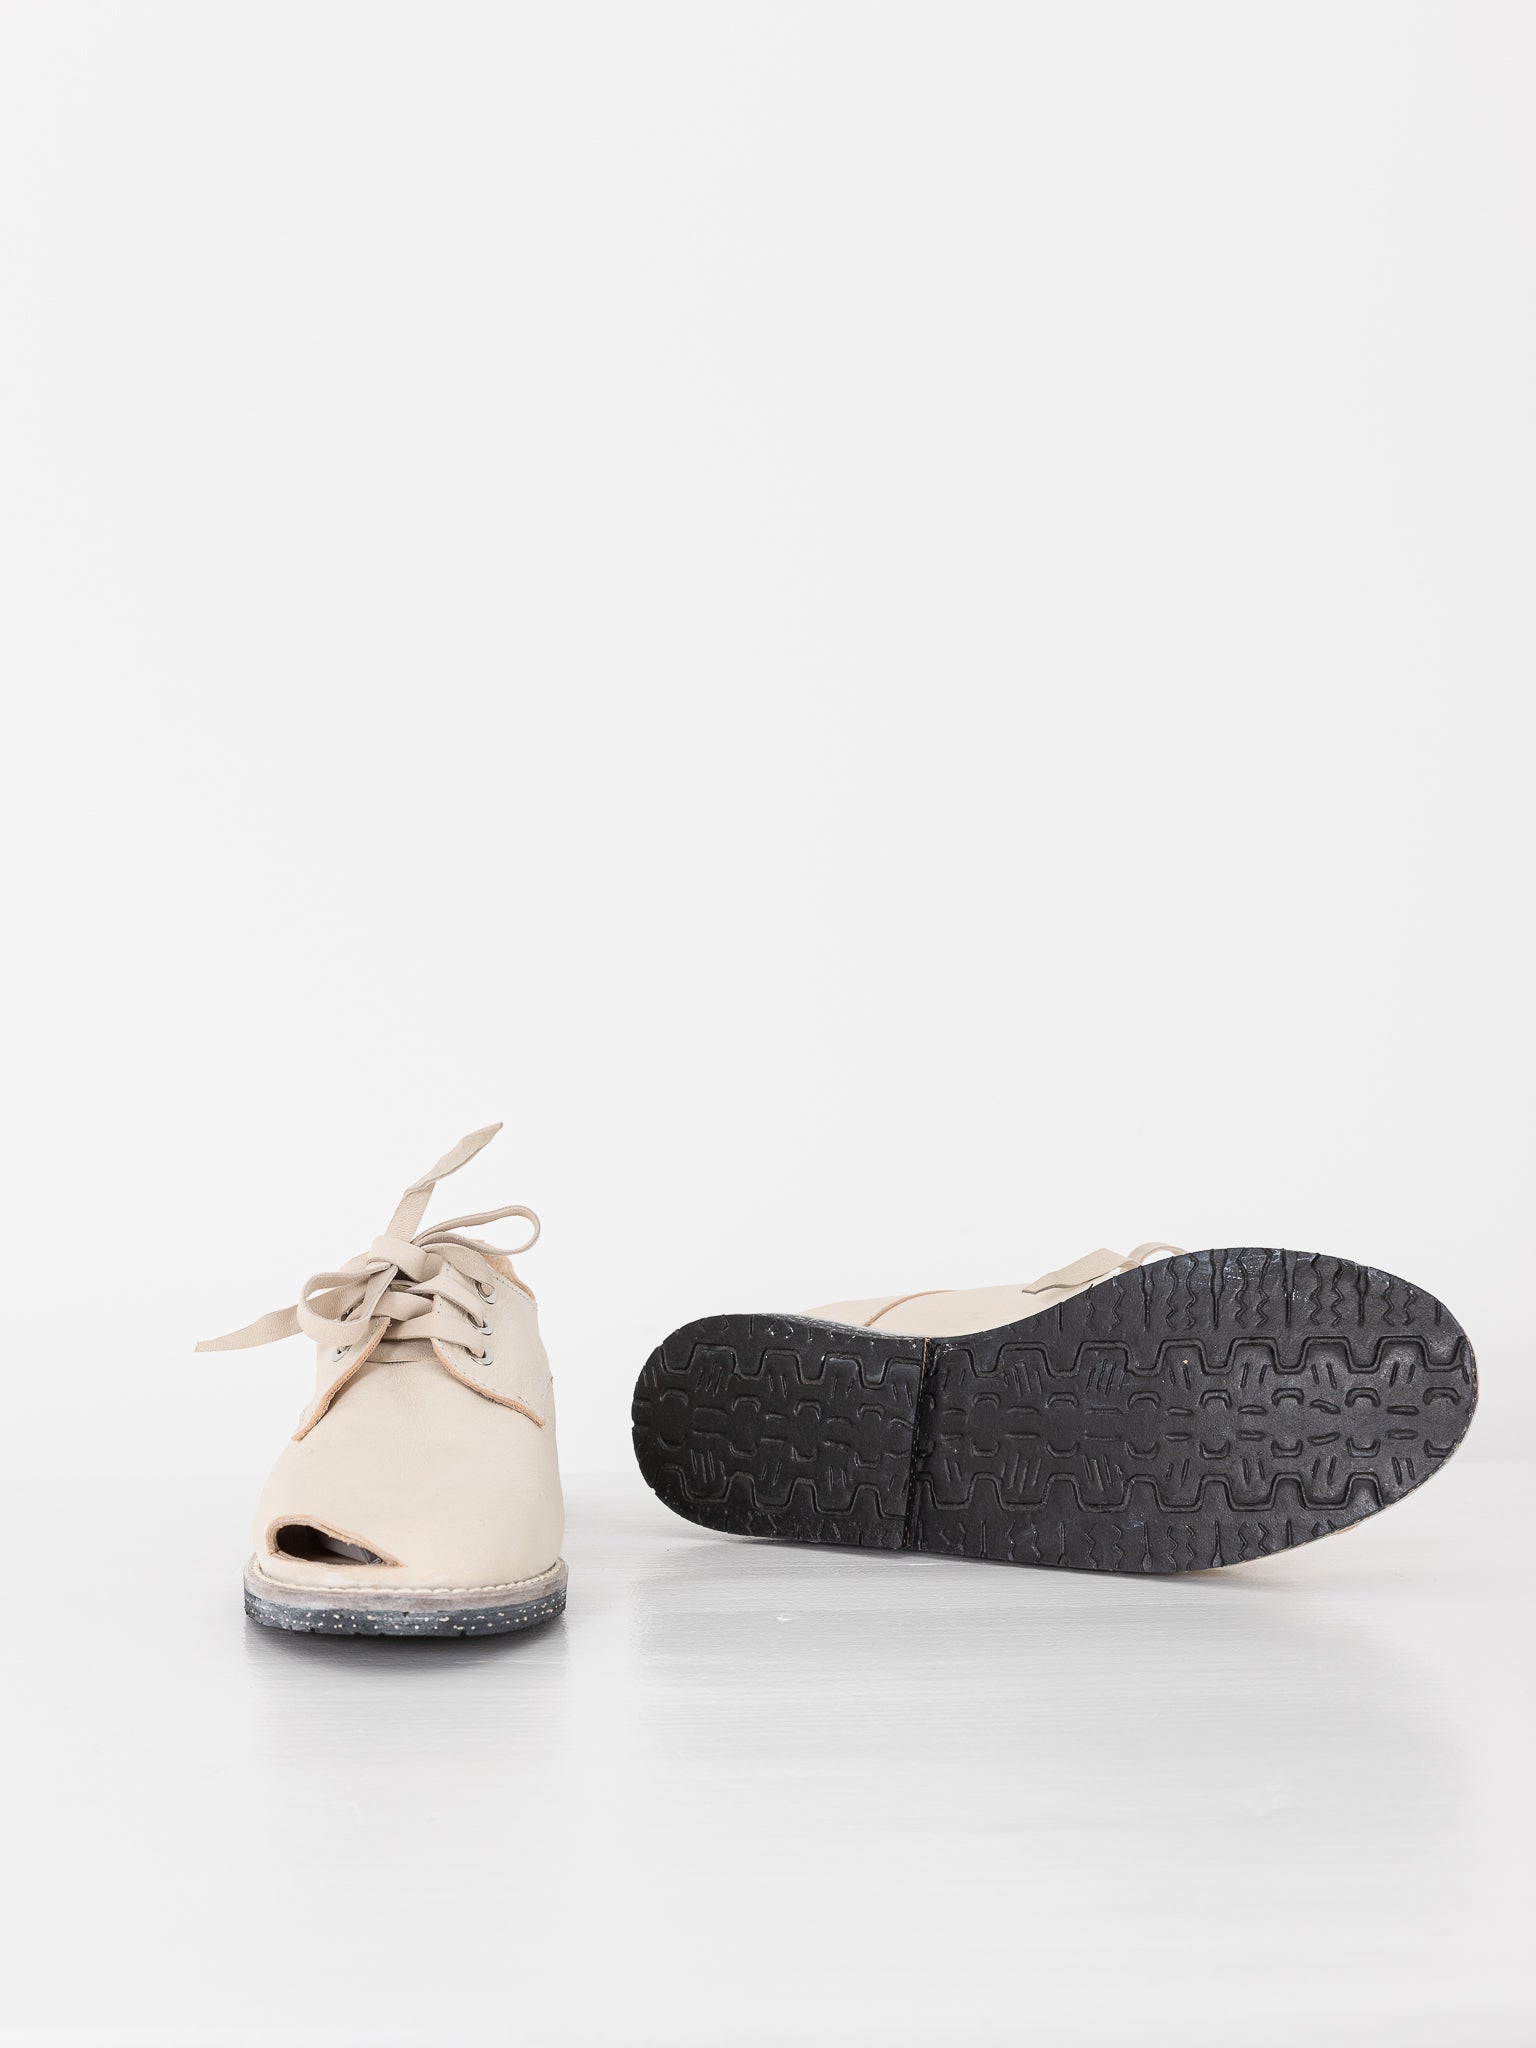 Atelier Inscrire Luis Tie Shoe, Natural - Worthwhile, Inc.